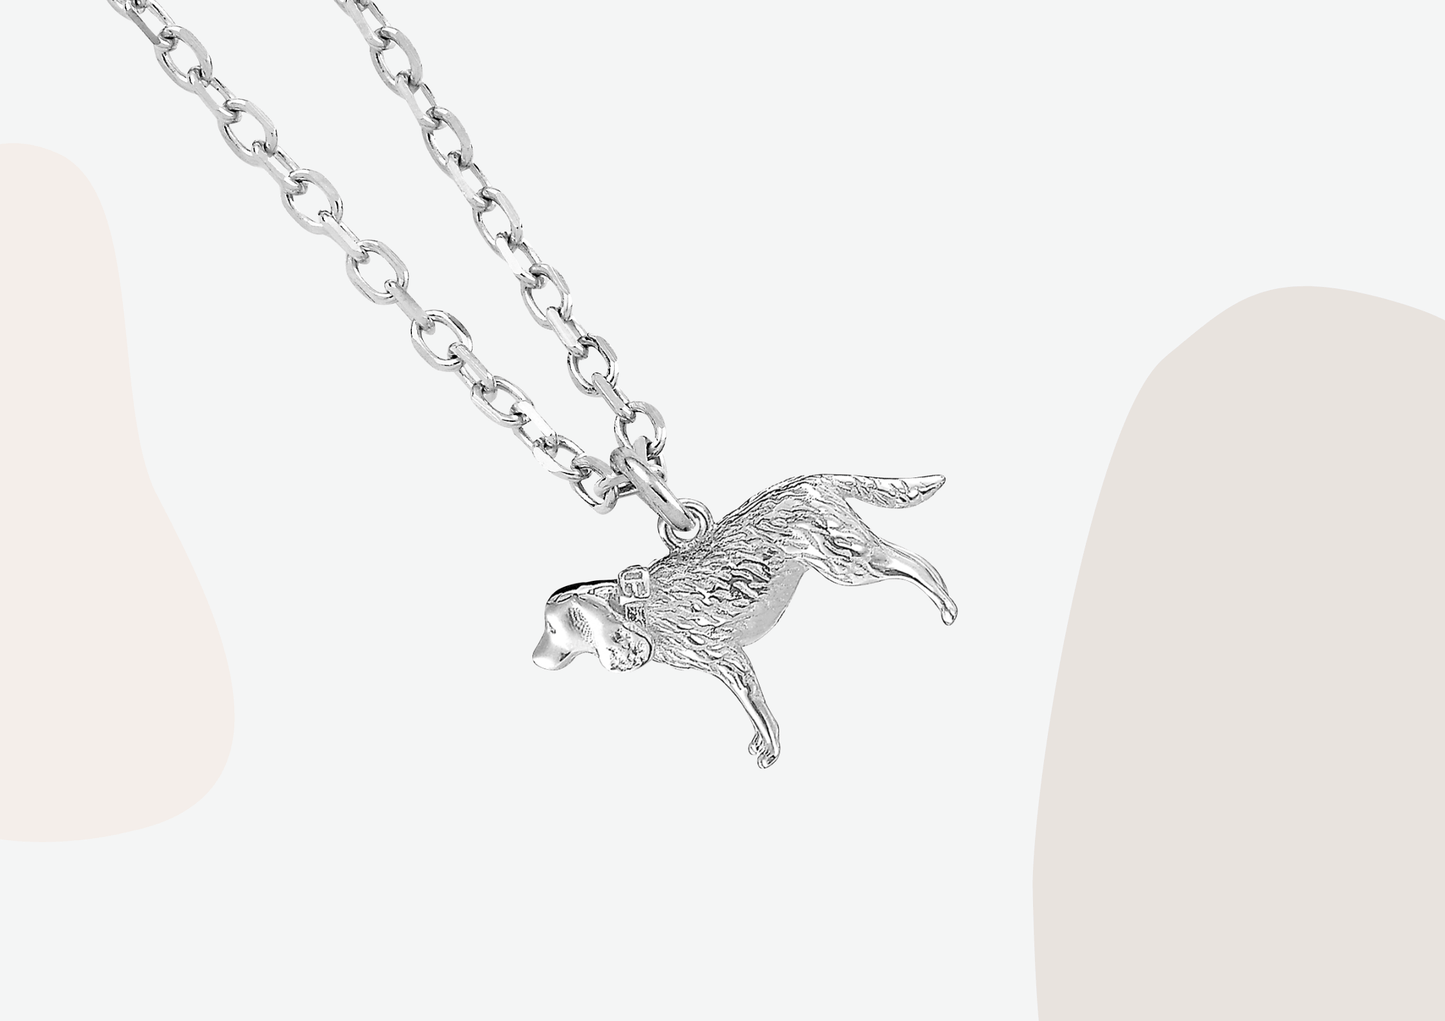 Cocker Spaniel Silver Necklace - MYLEE London